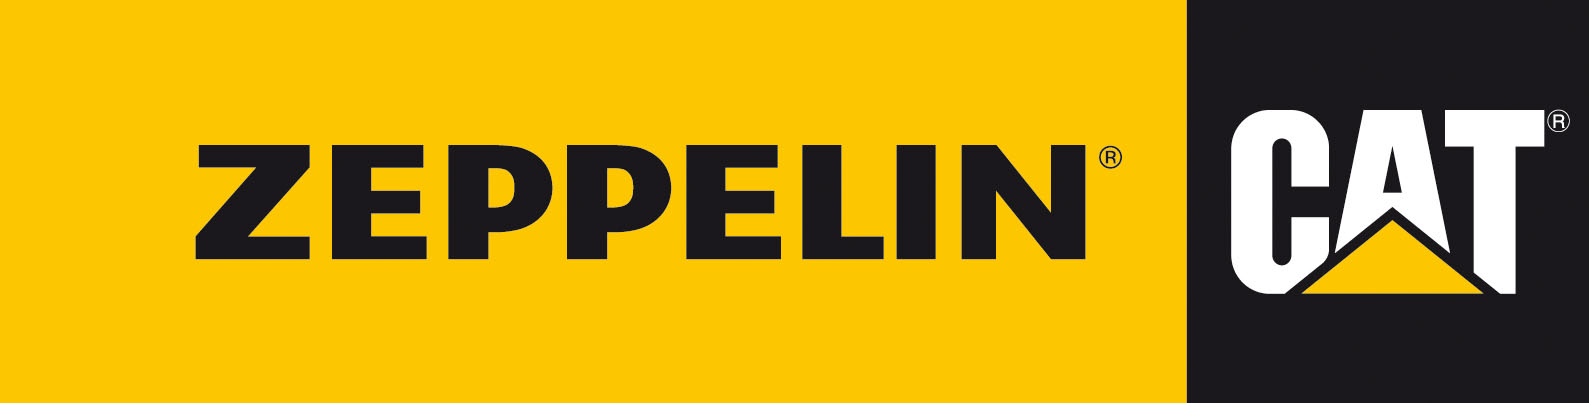 Zeppelin Logo Wallpaper